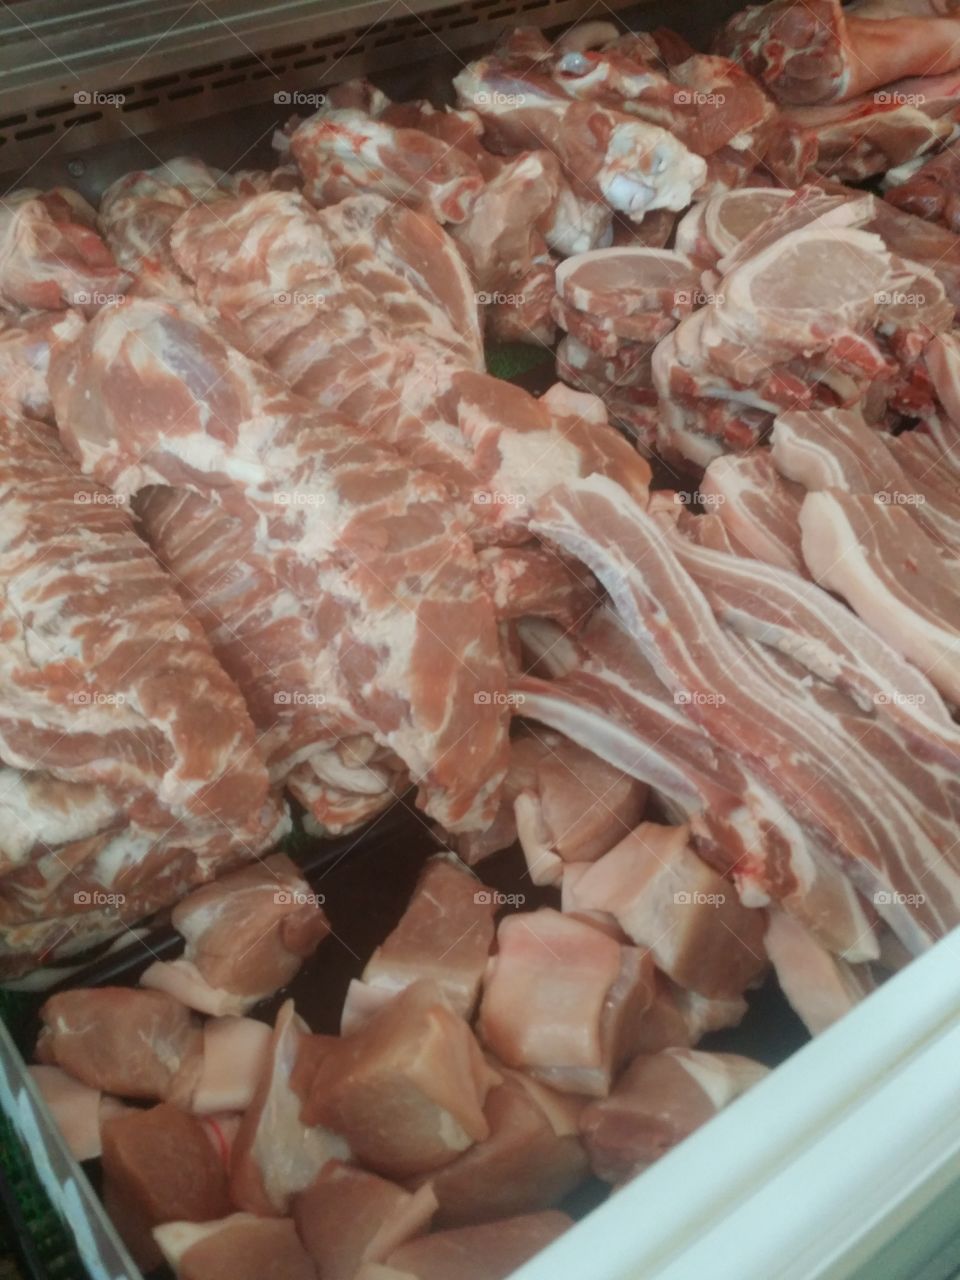 sliced meats 😊😊